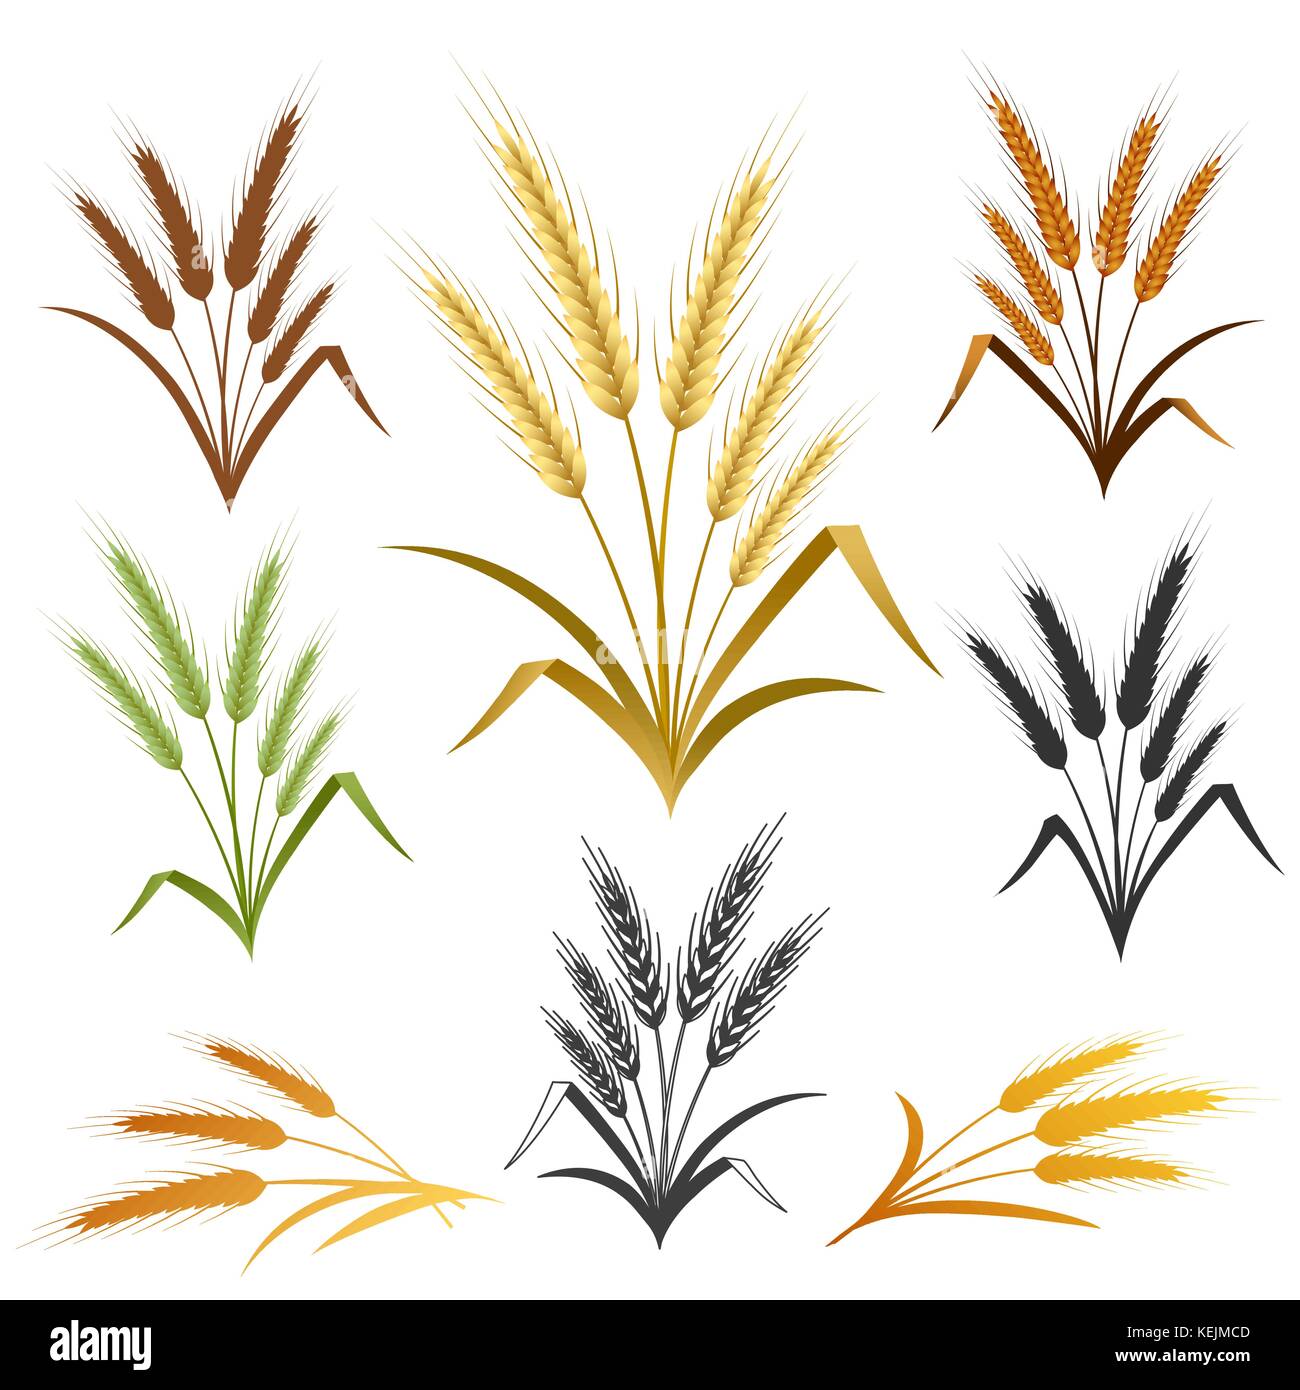 Wheat ears set. Bread logo or label design element. Vector illustration Stock Vector